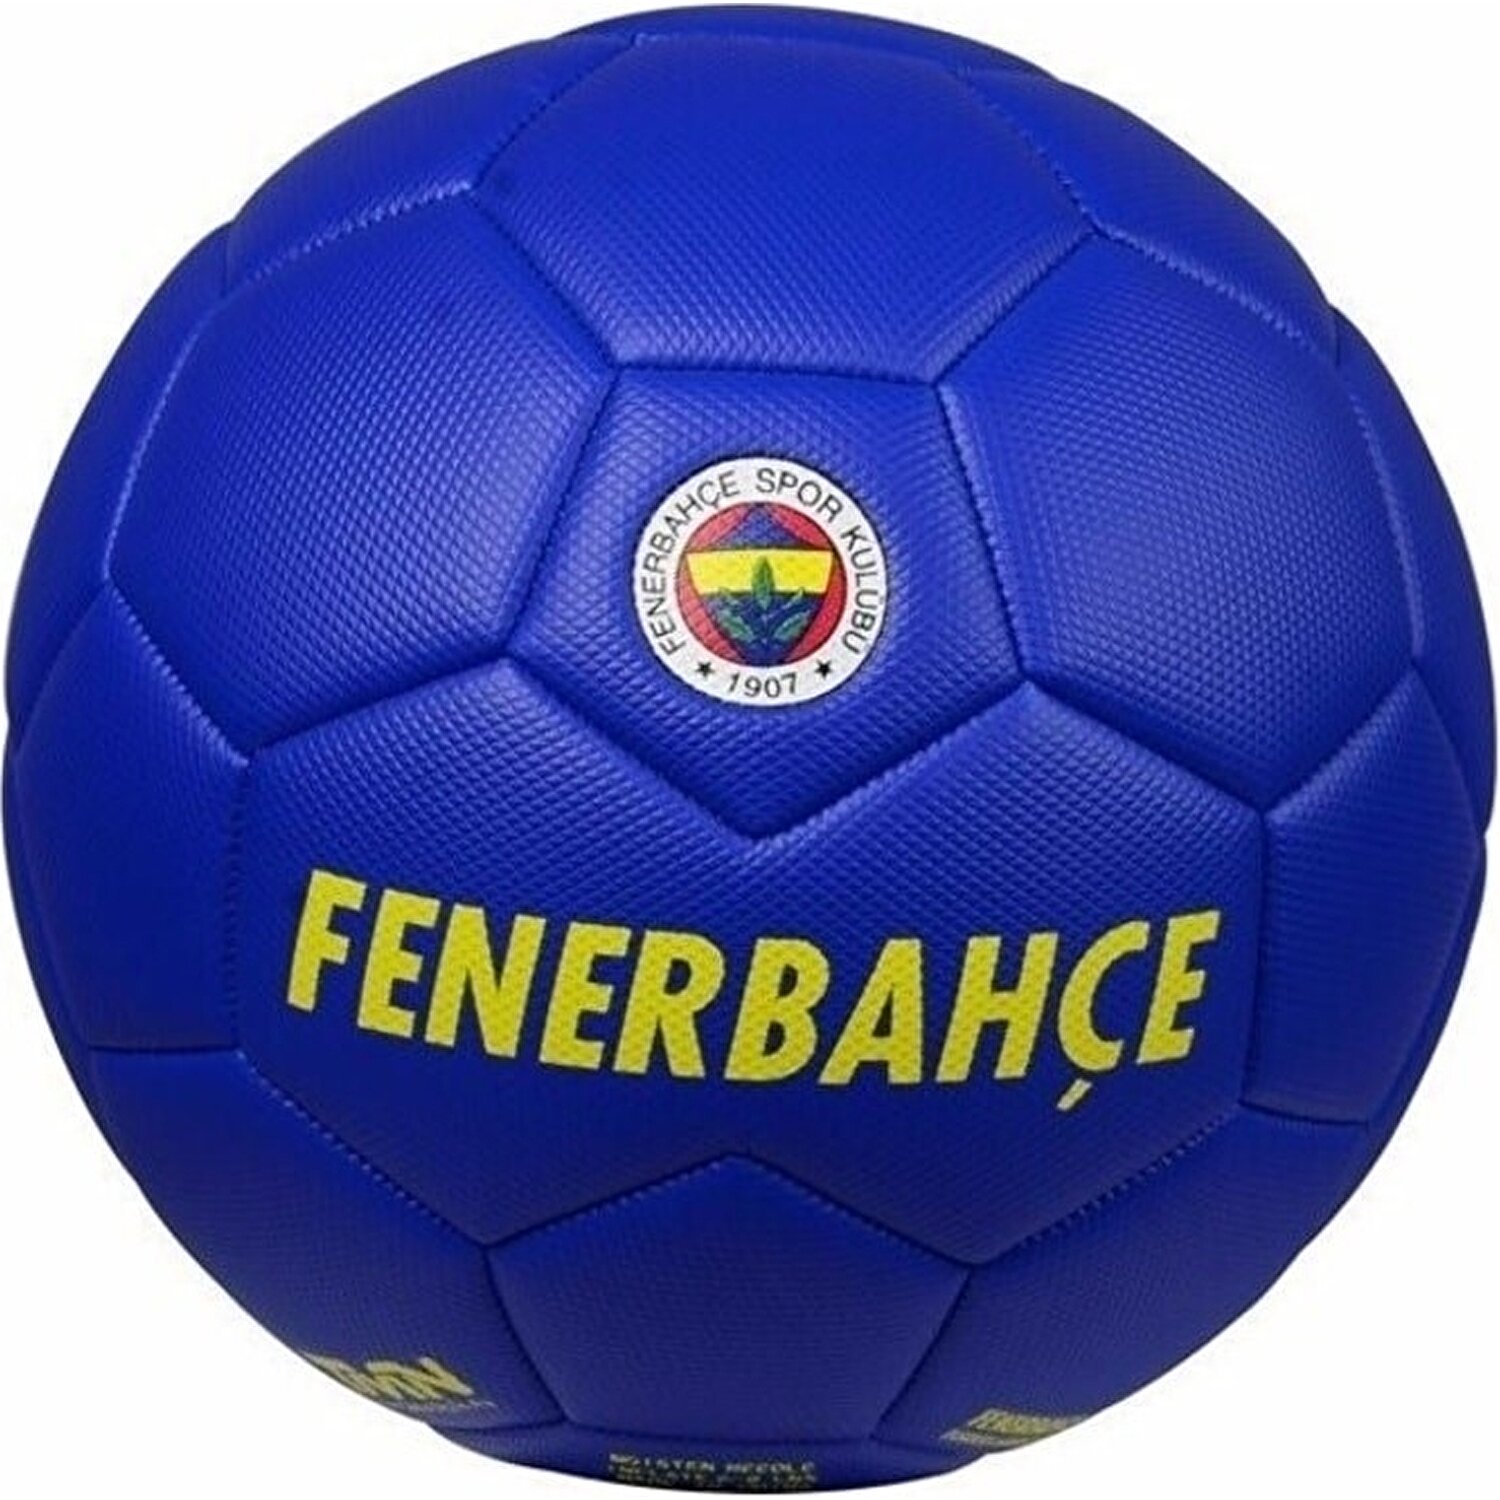 Fenerbahçe Premium Futbol Topu No:5 Mavi